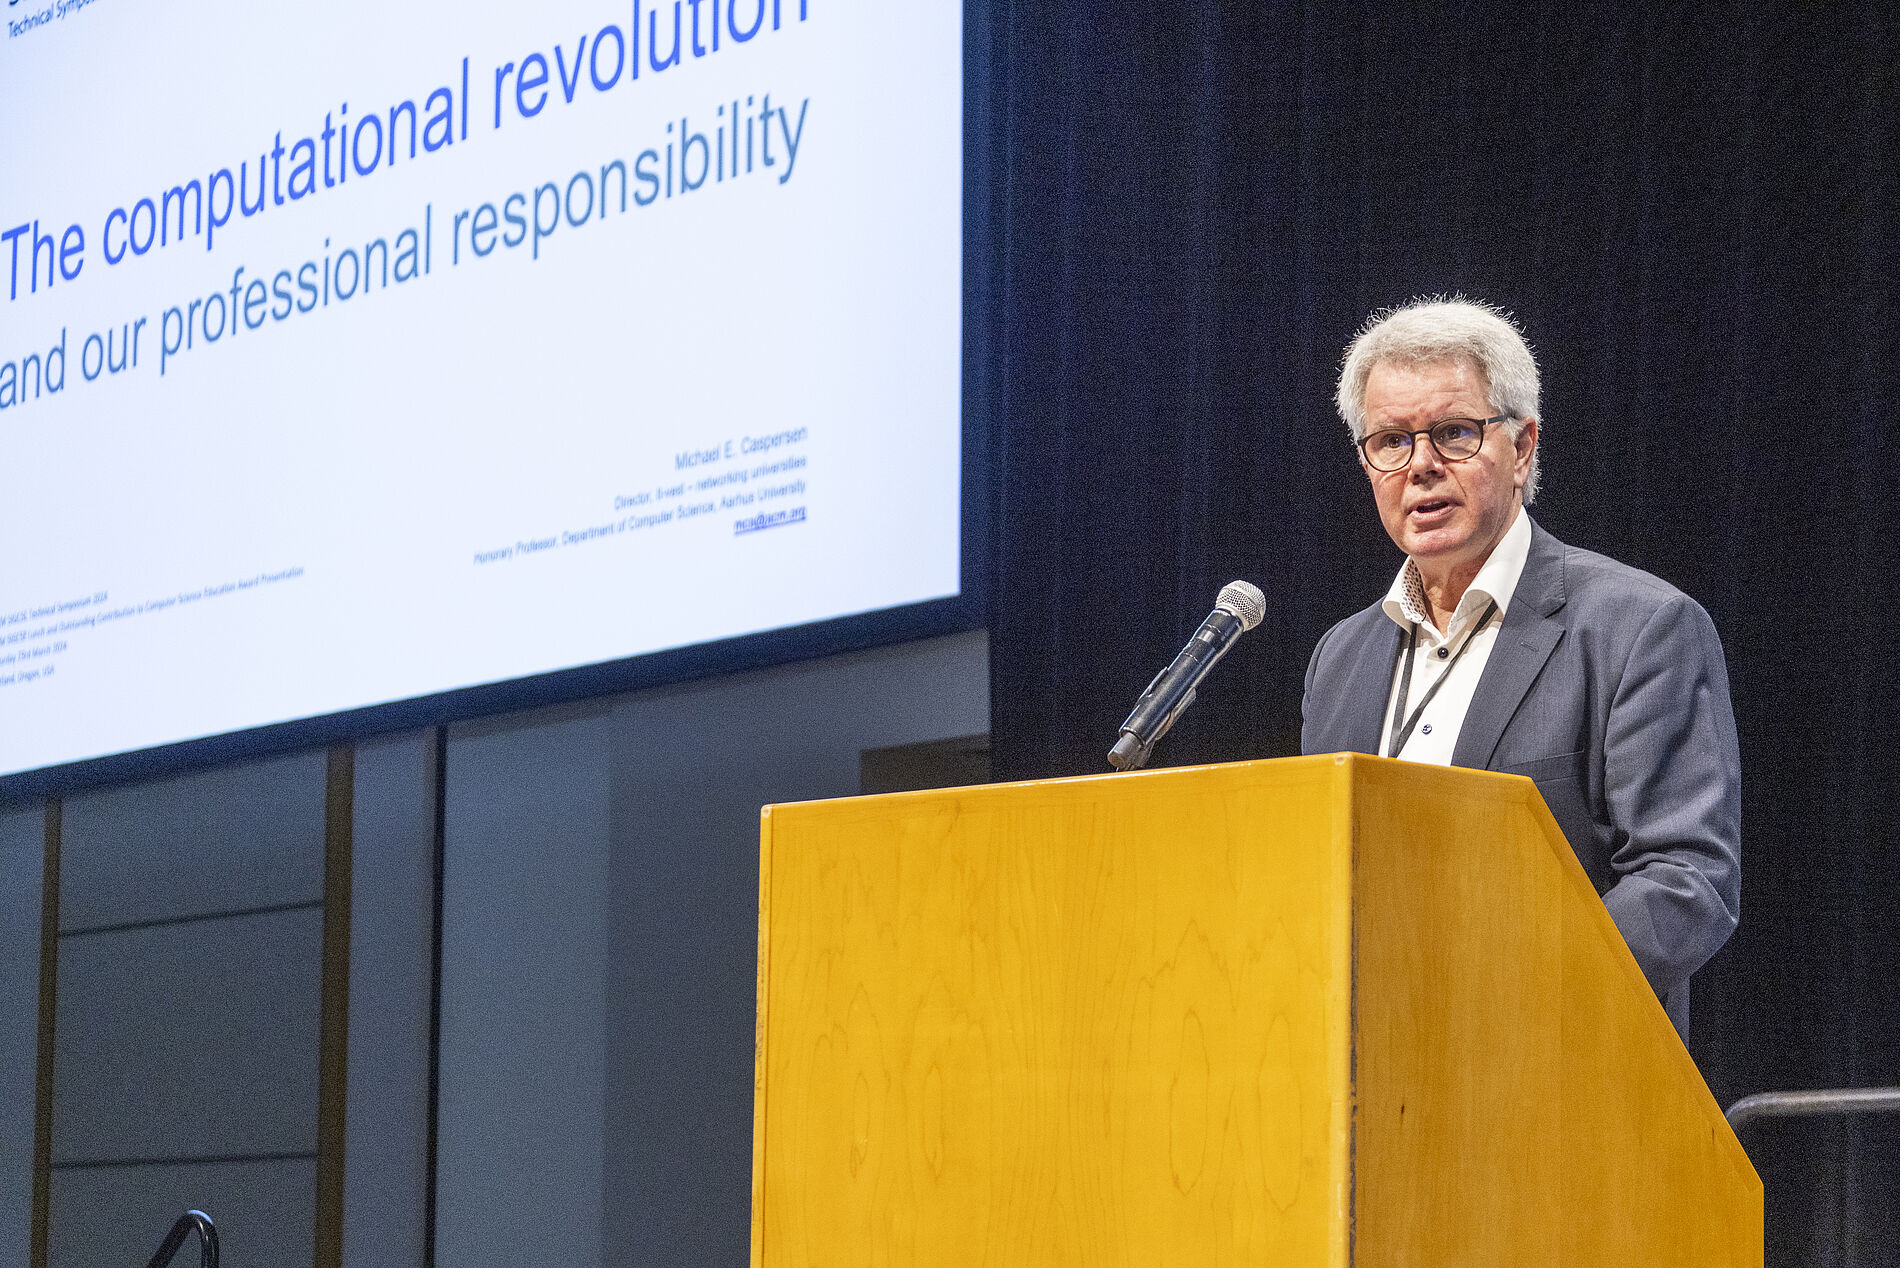 Michael E. Caspersen holder keynote under overskriften "The computational revolution and our professional responsibility"